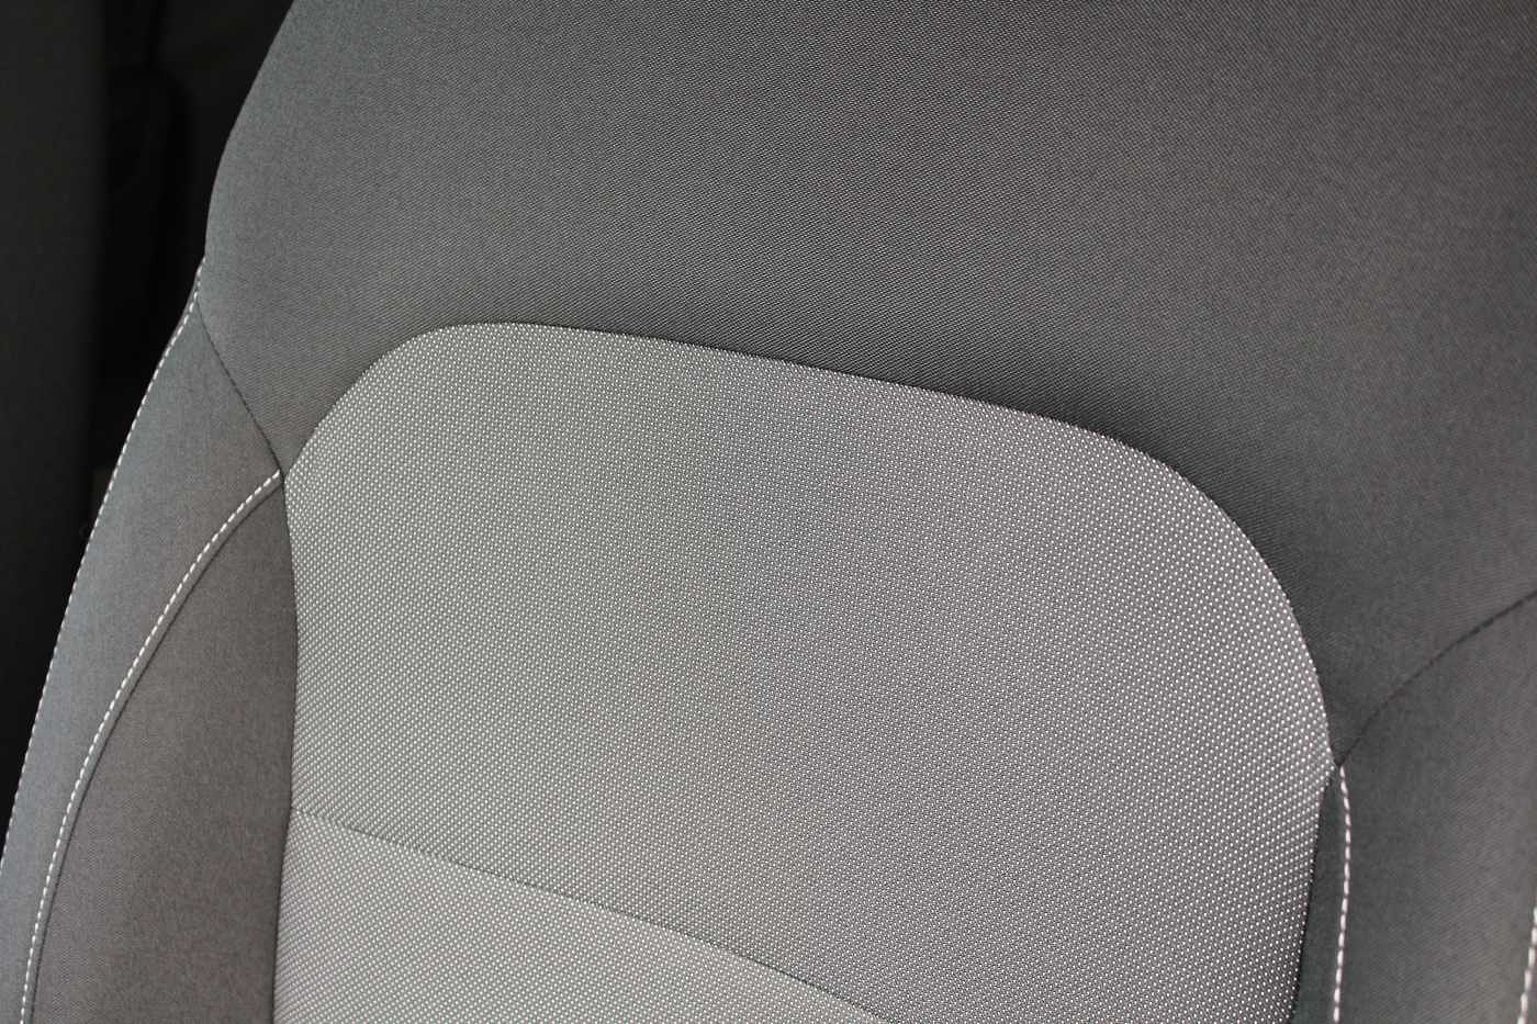 SKODA Fabia 1.0 TSI (110ps) Colour Edition 5 Door Hatchback